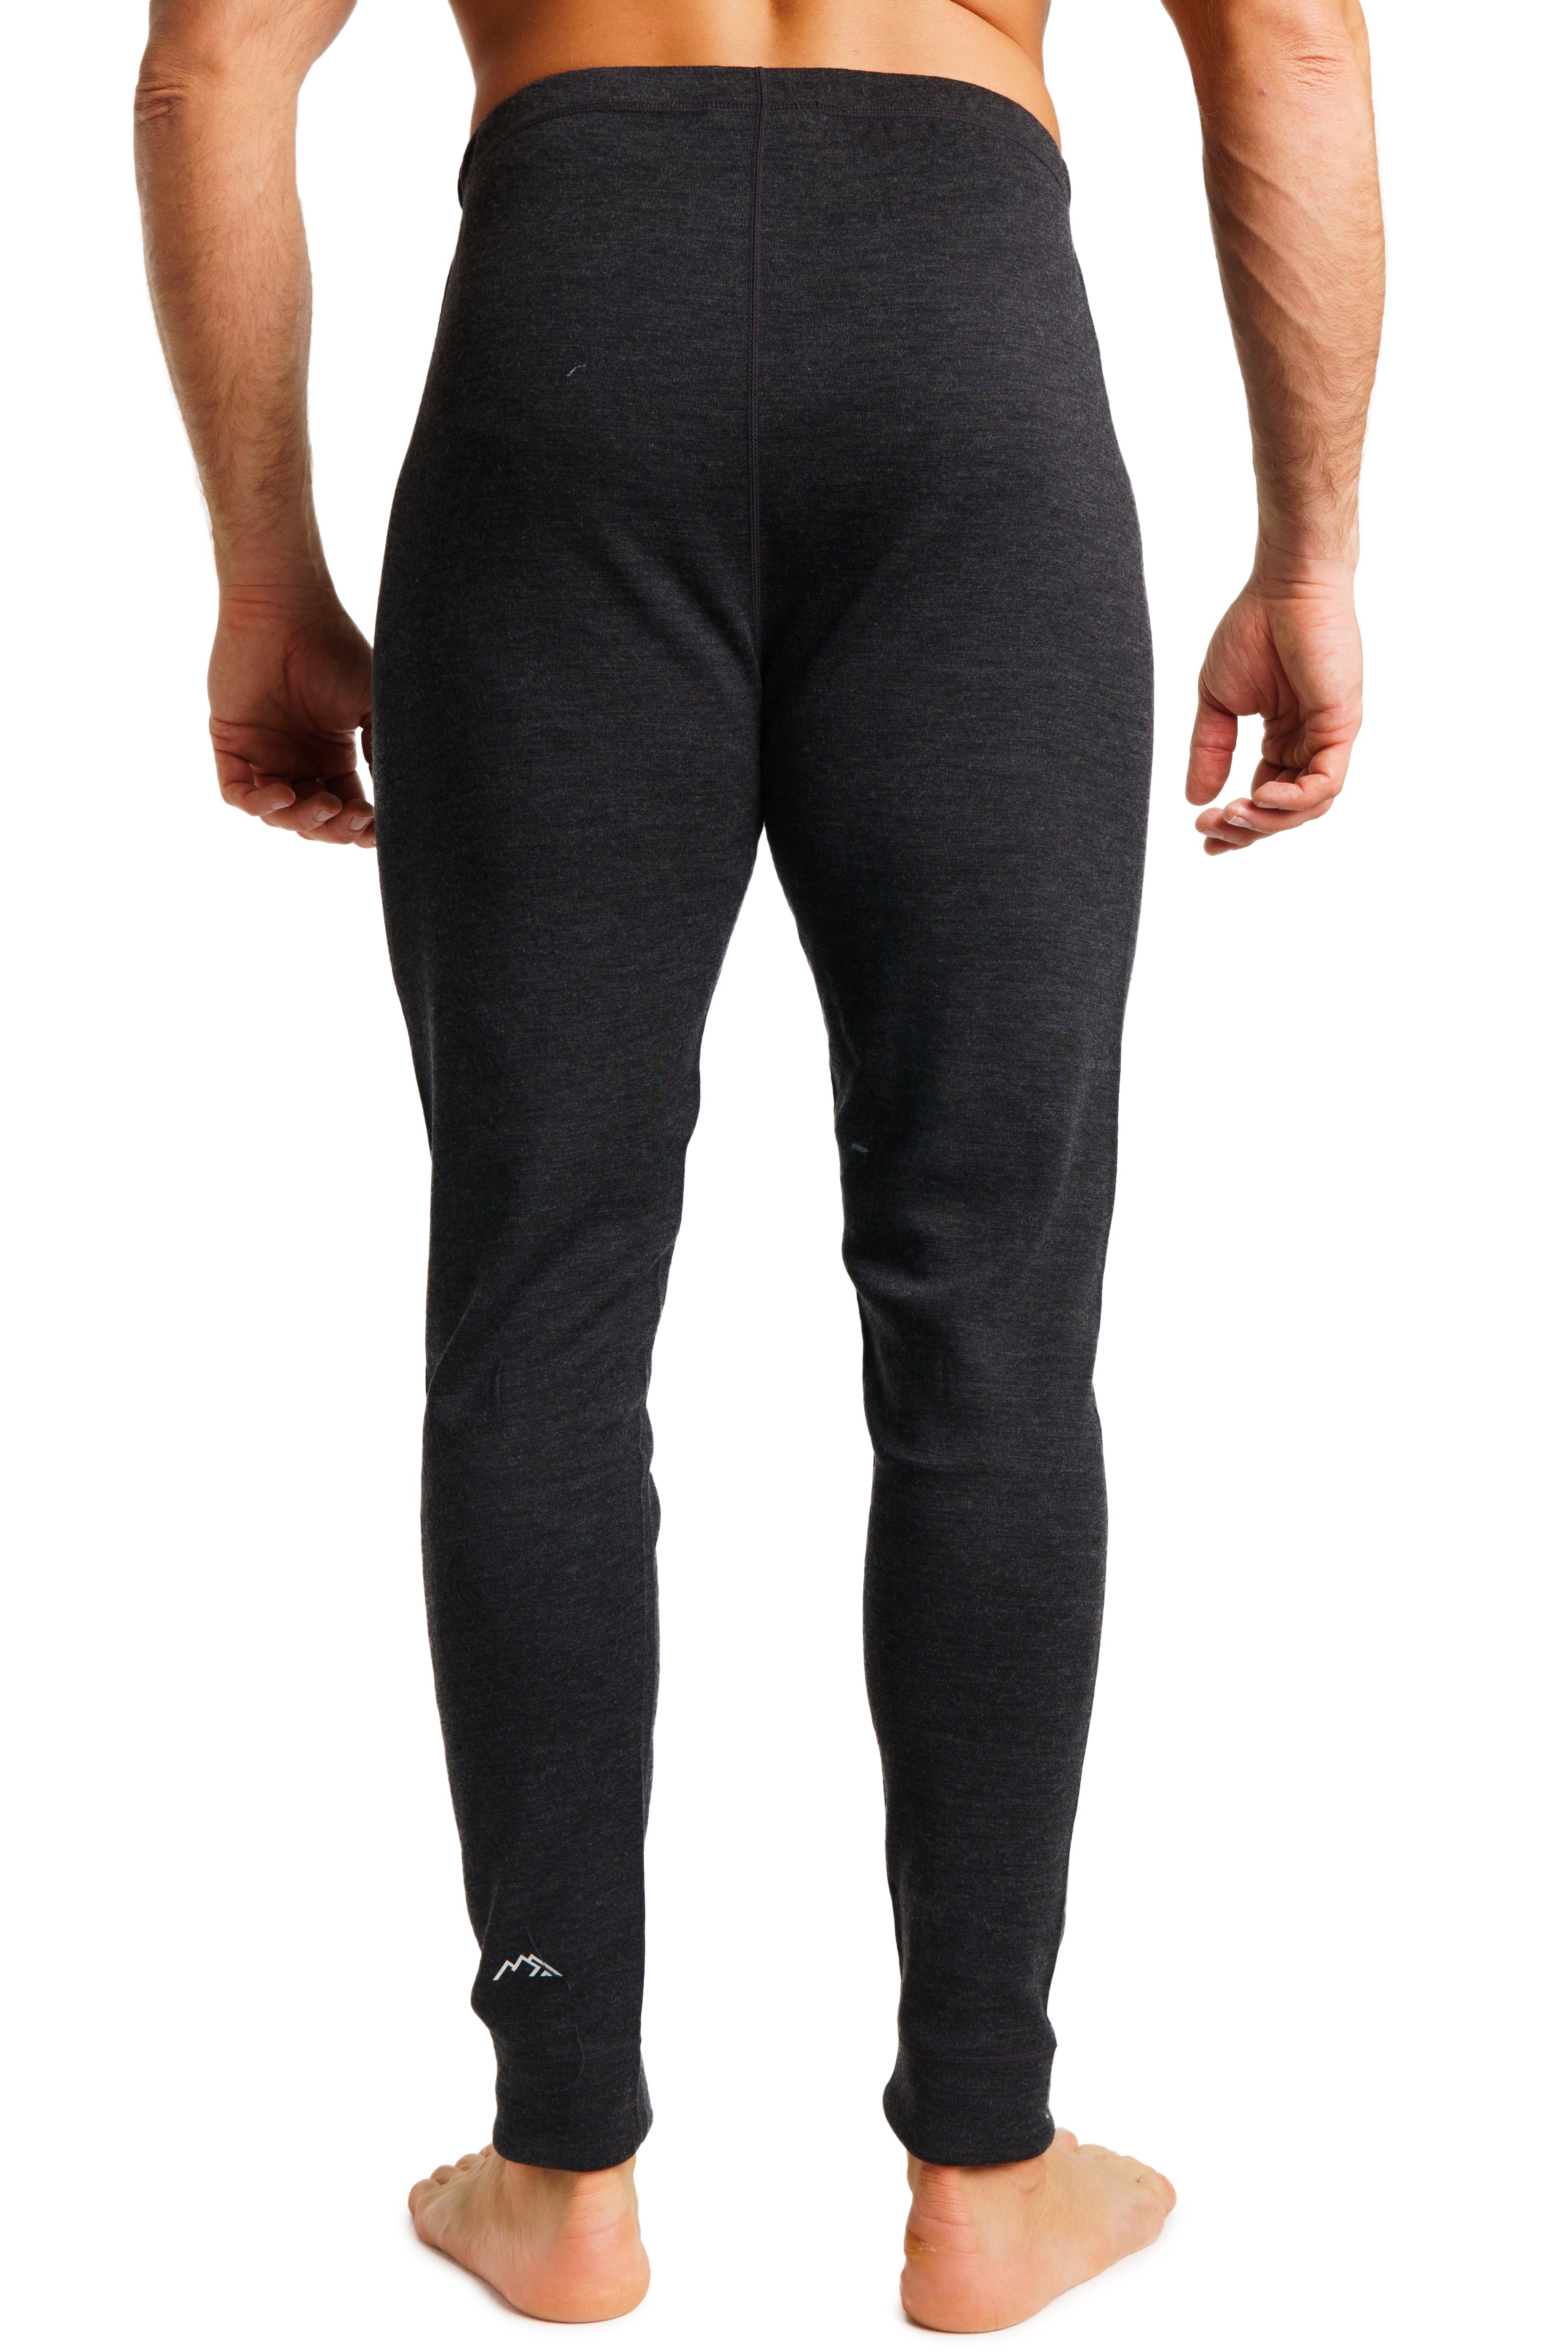 Merino Wool Pants - MidweightBase Layer | Bottom | Underwear | Thermal |  Charcoal Grey